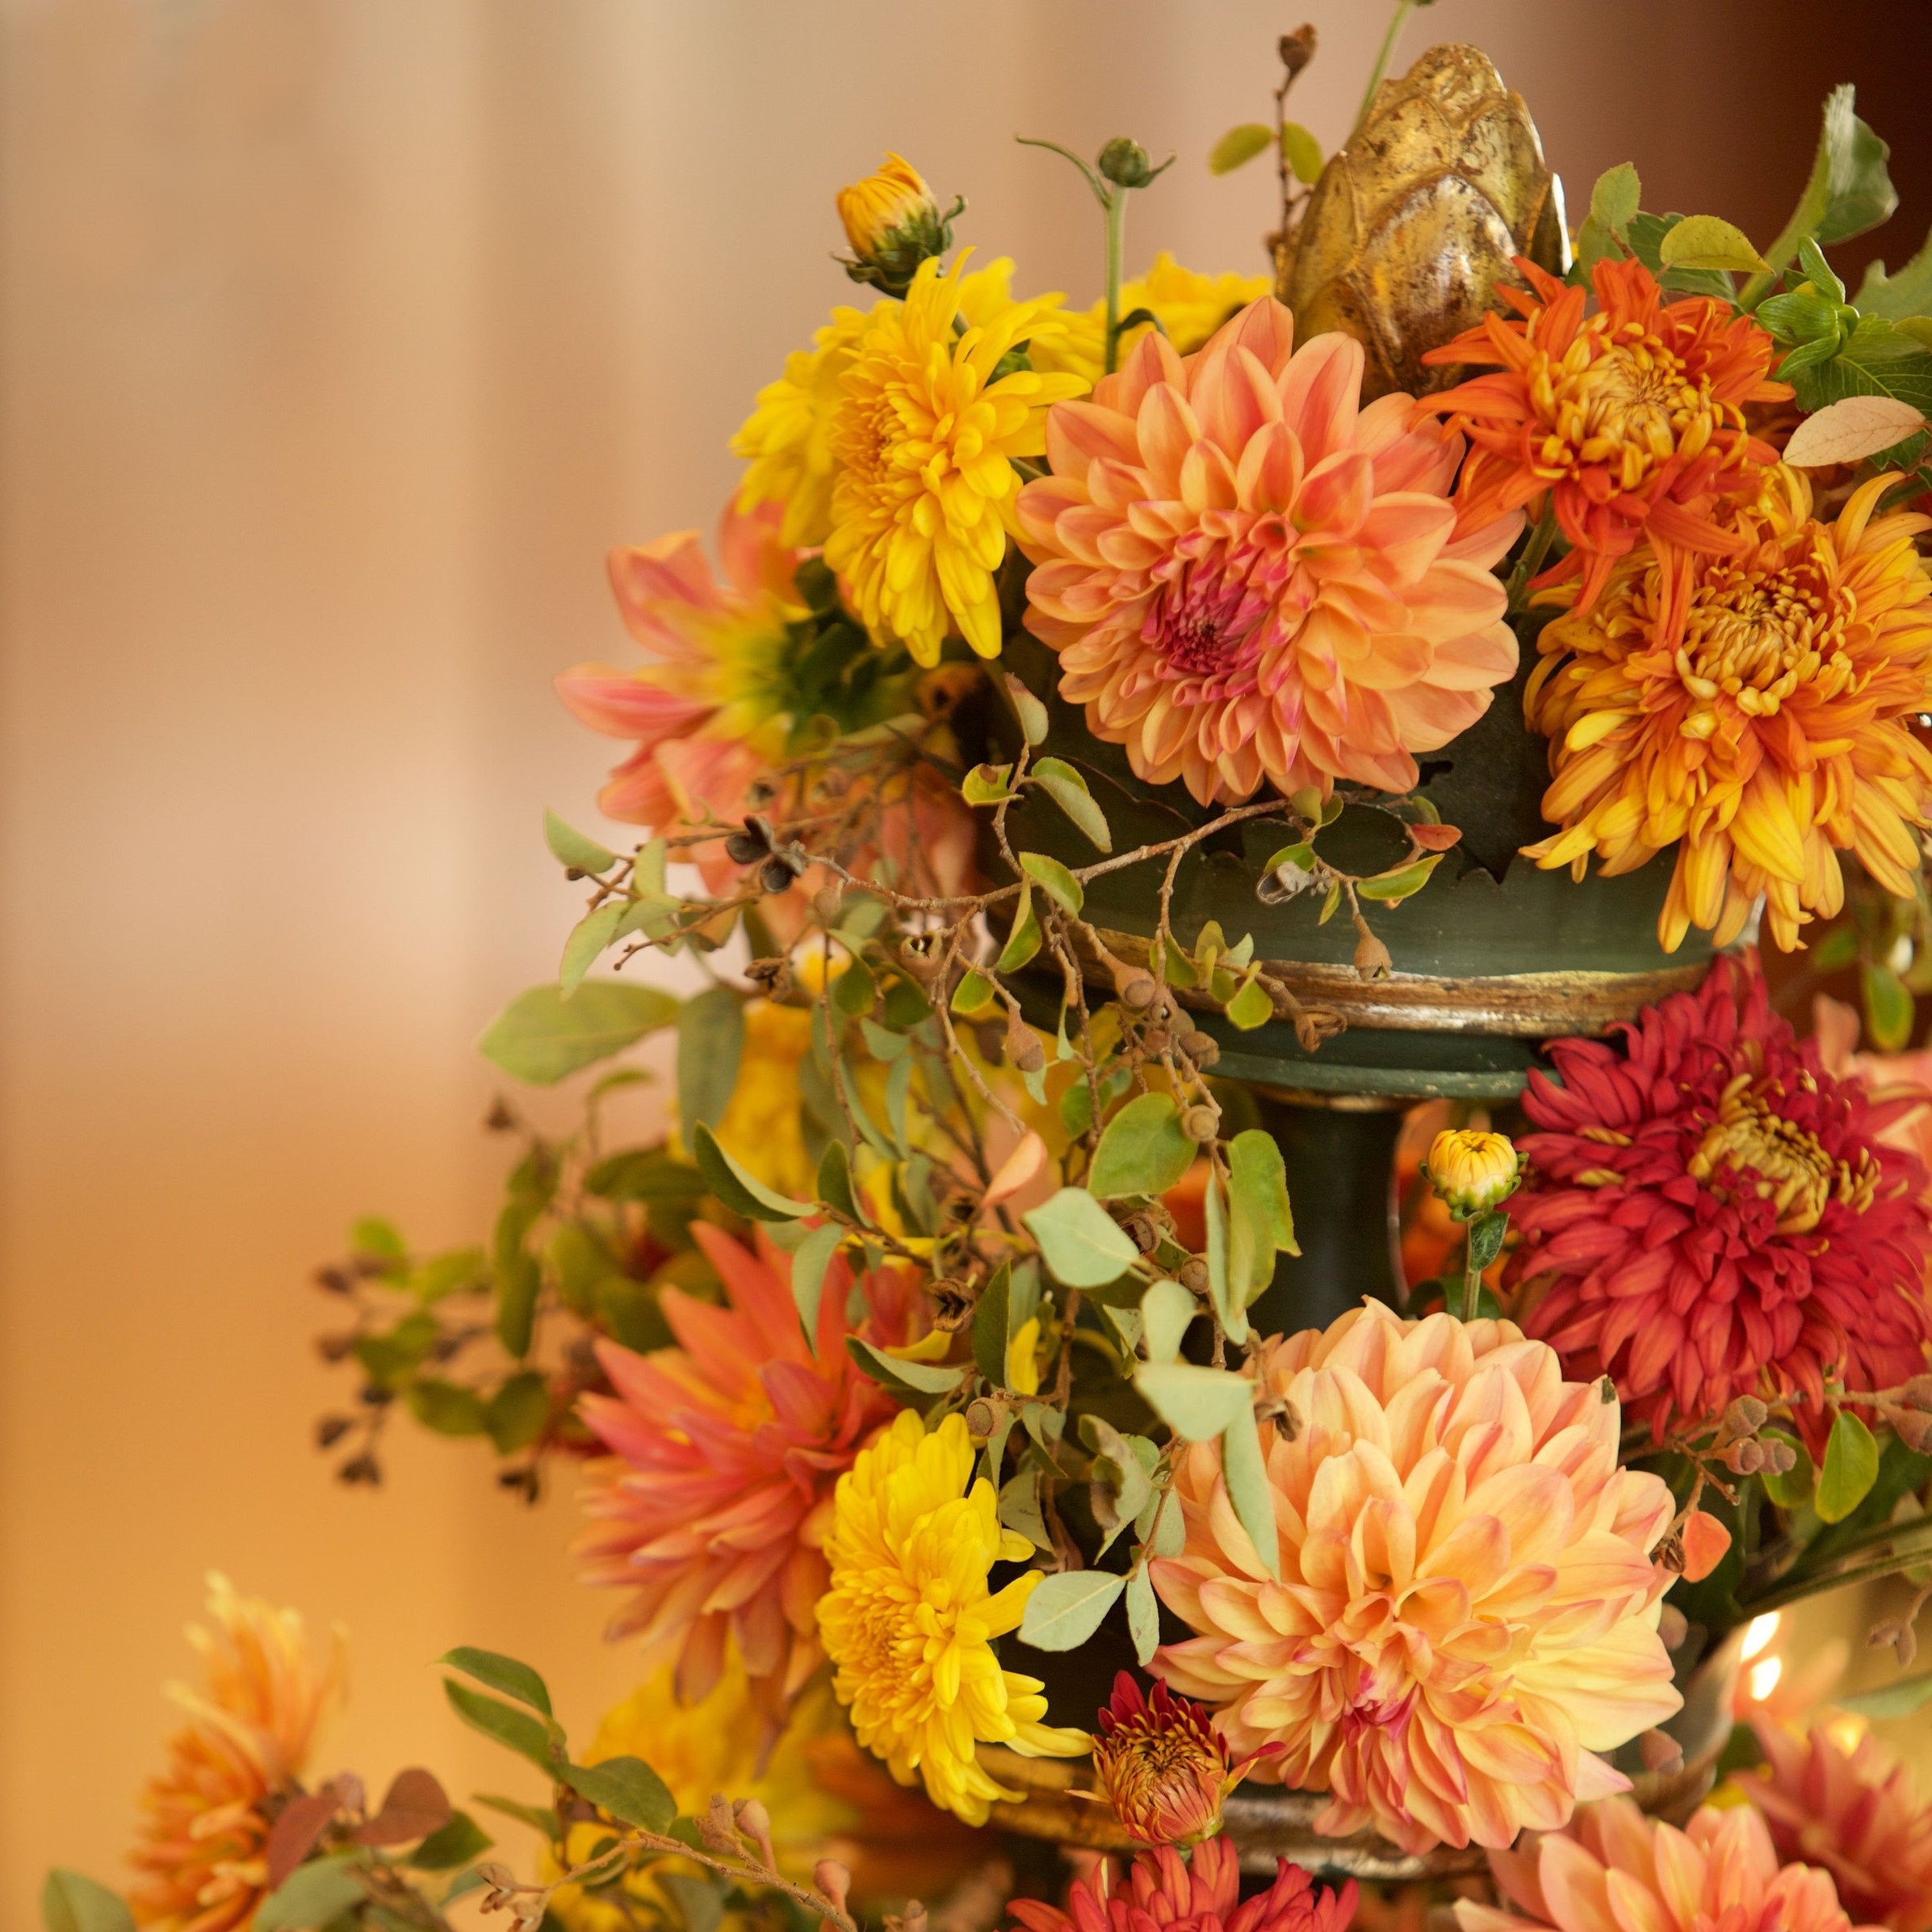 October Member Event: Follow a Floral Arranger